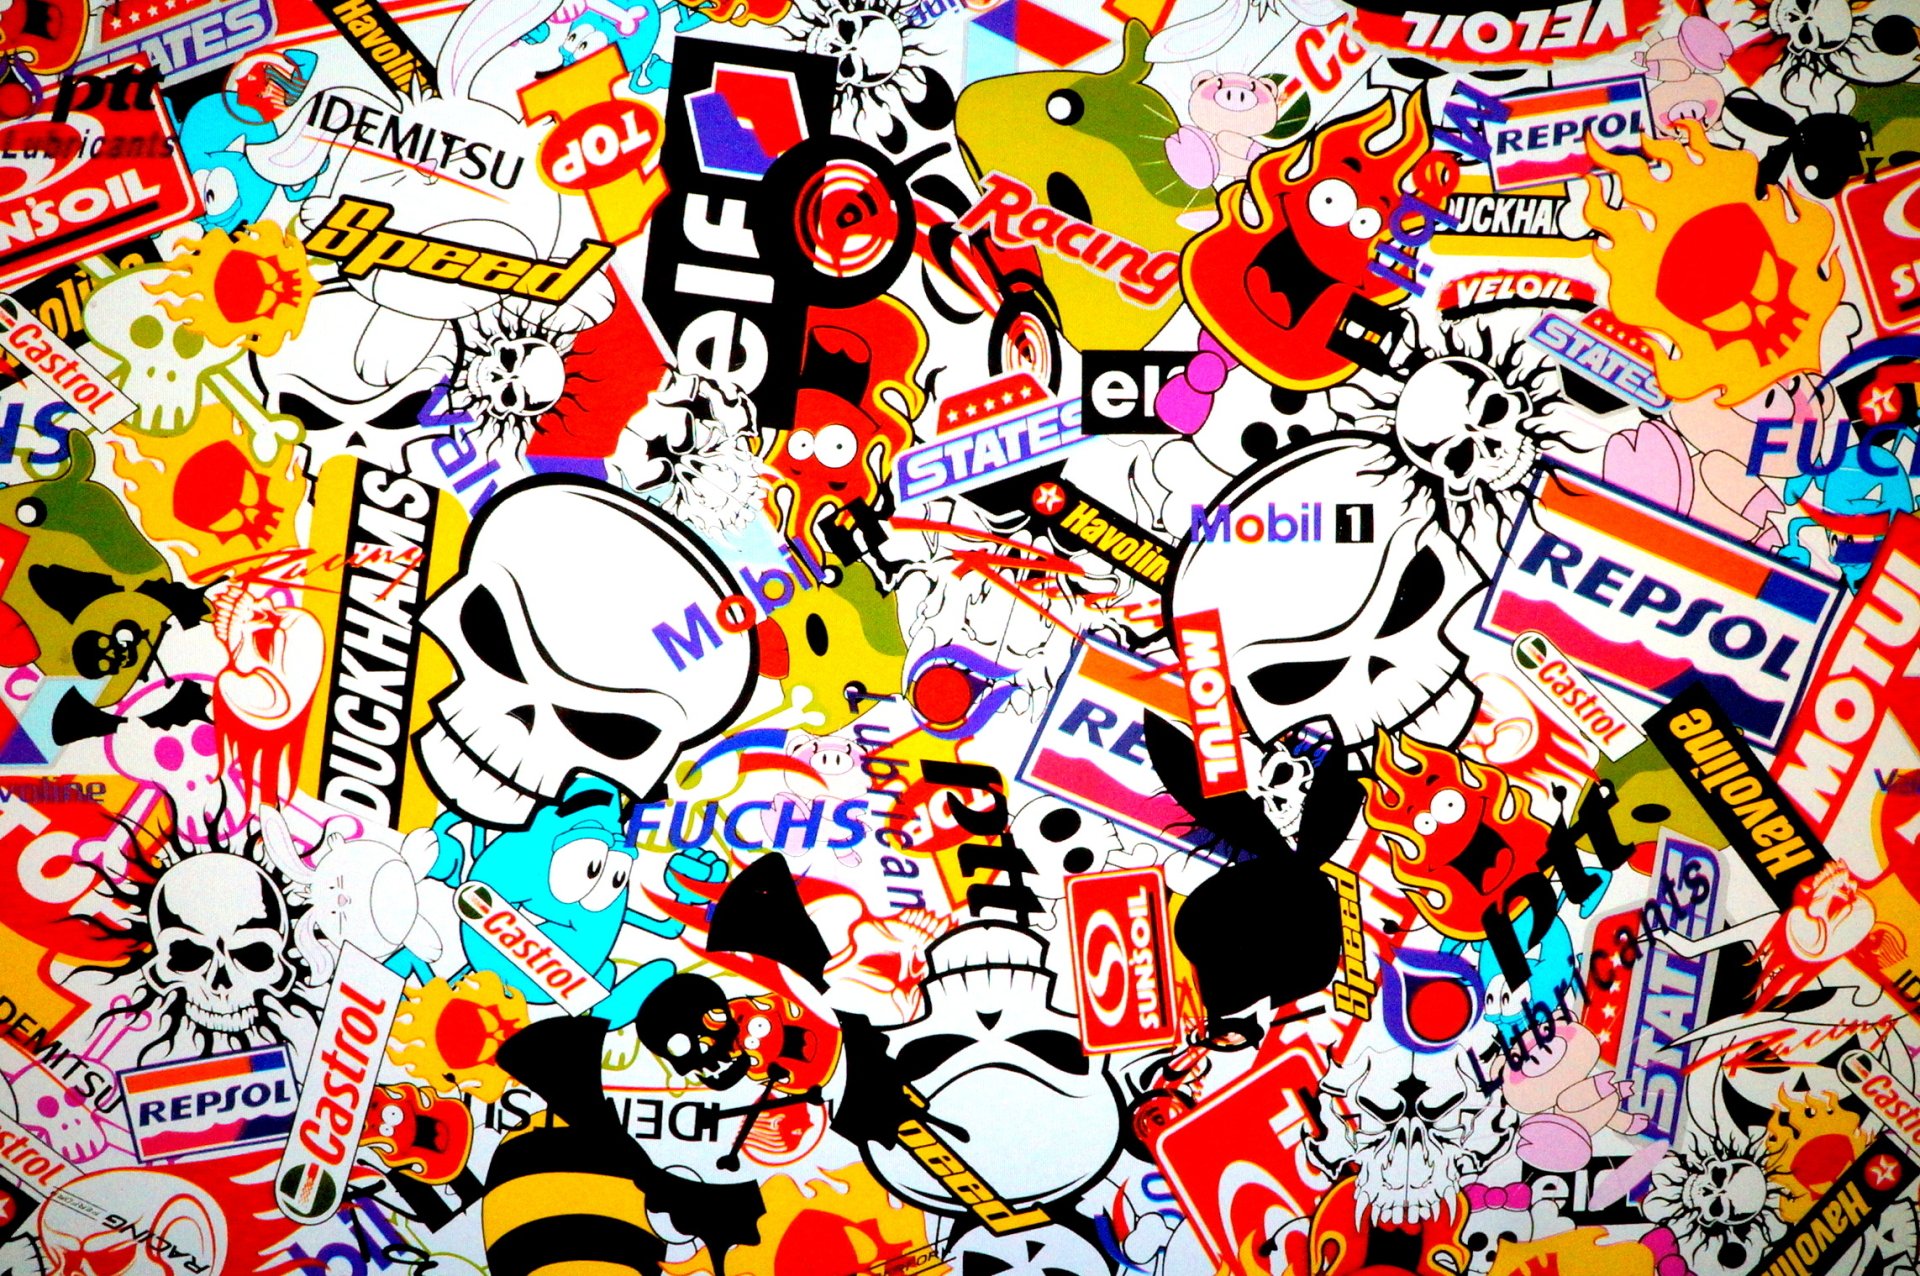  Sticker  Bomb  HD Wallpaper Background Image 2285x1519 